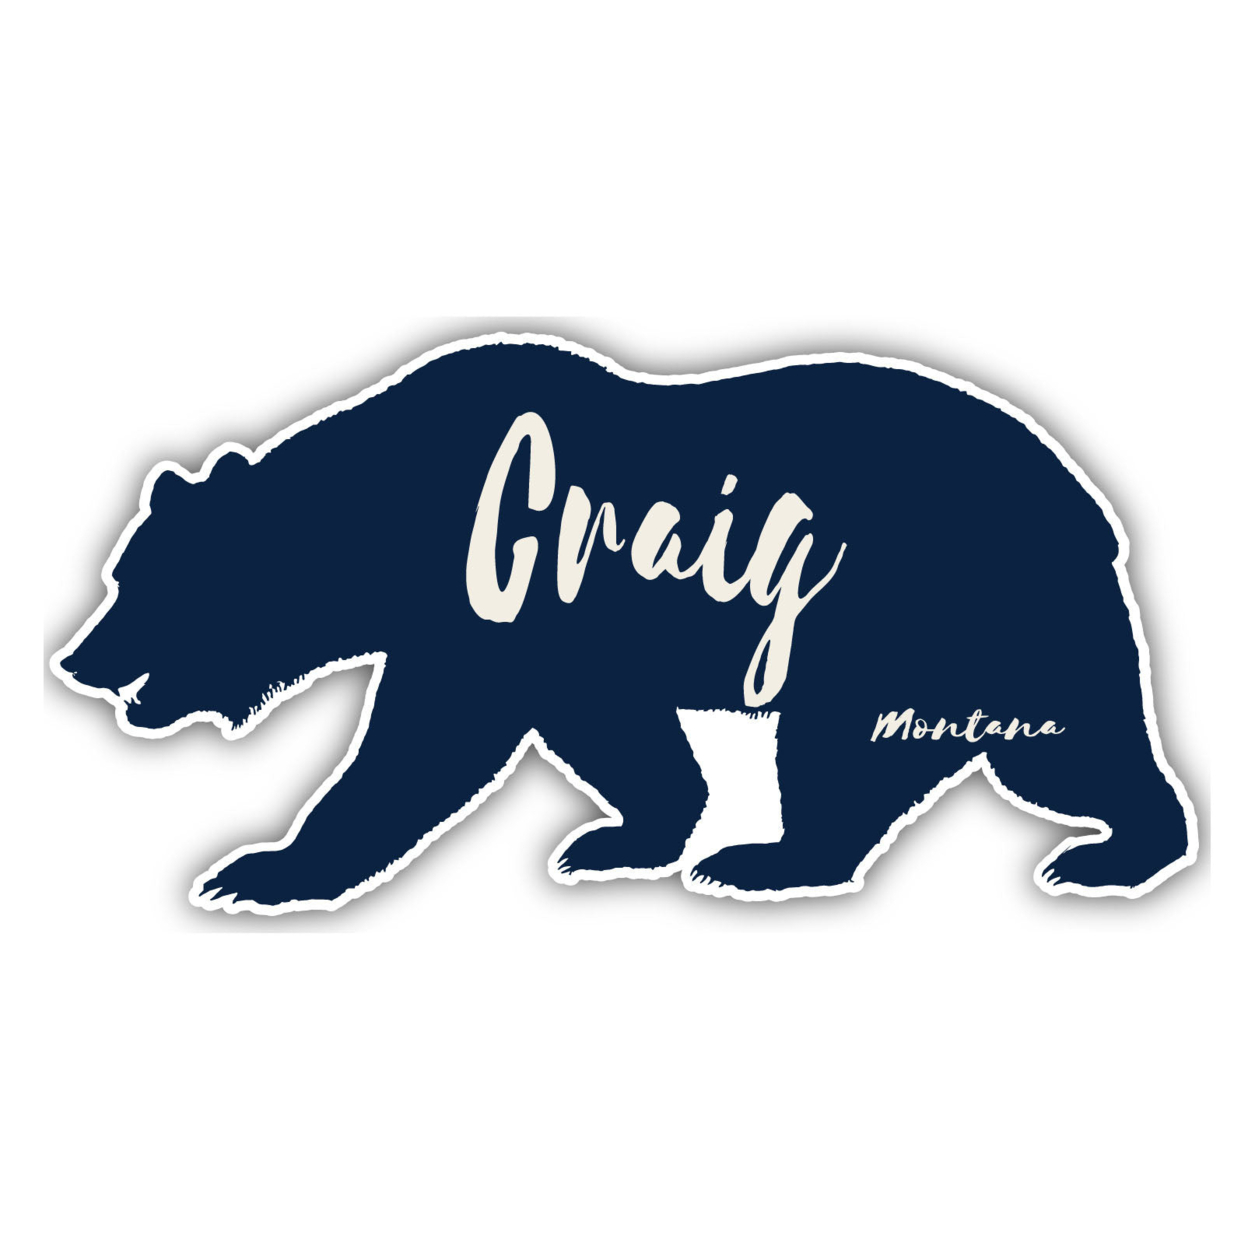 Craig Montana Souvenir Decorative Stickers (Choose Theme And Size) - Single Unit, 10-Inch, Bear